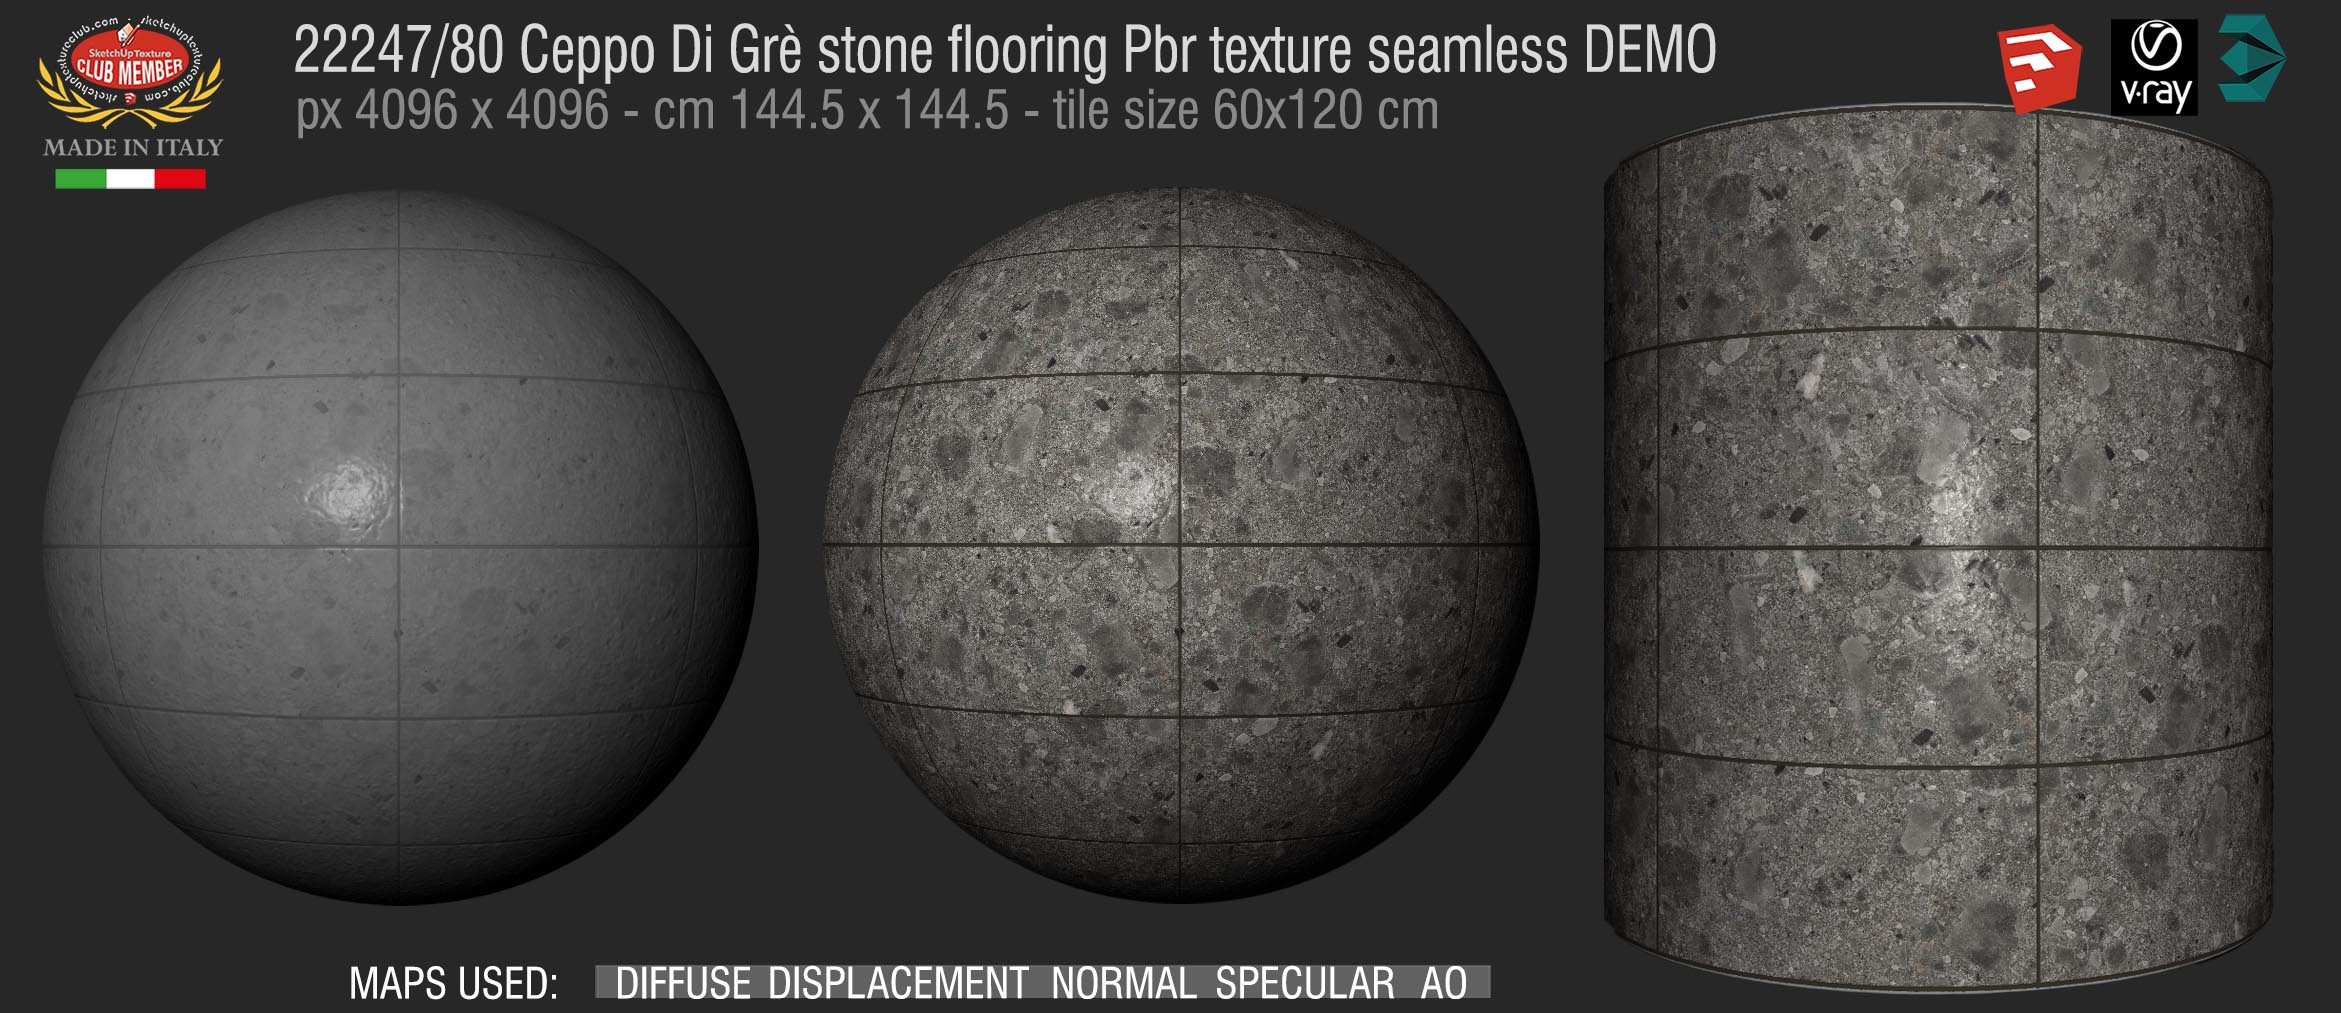 22247_80 Ceppo Di Grè stone flooring Pbr texture seamless DEMO - INTERIOR / OUTDOOR Paving - tile size 60x120 cm